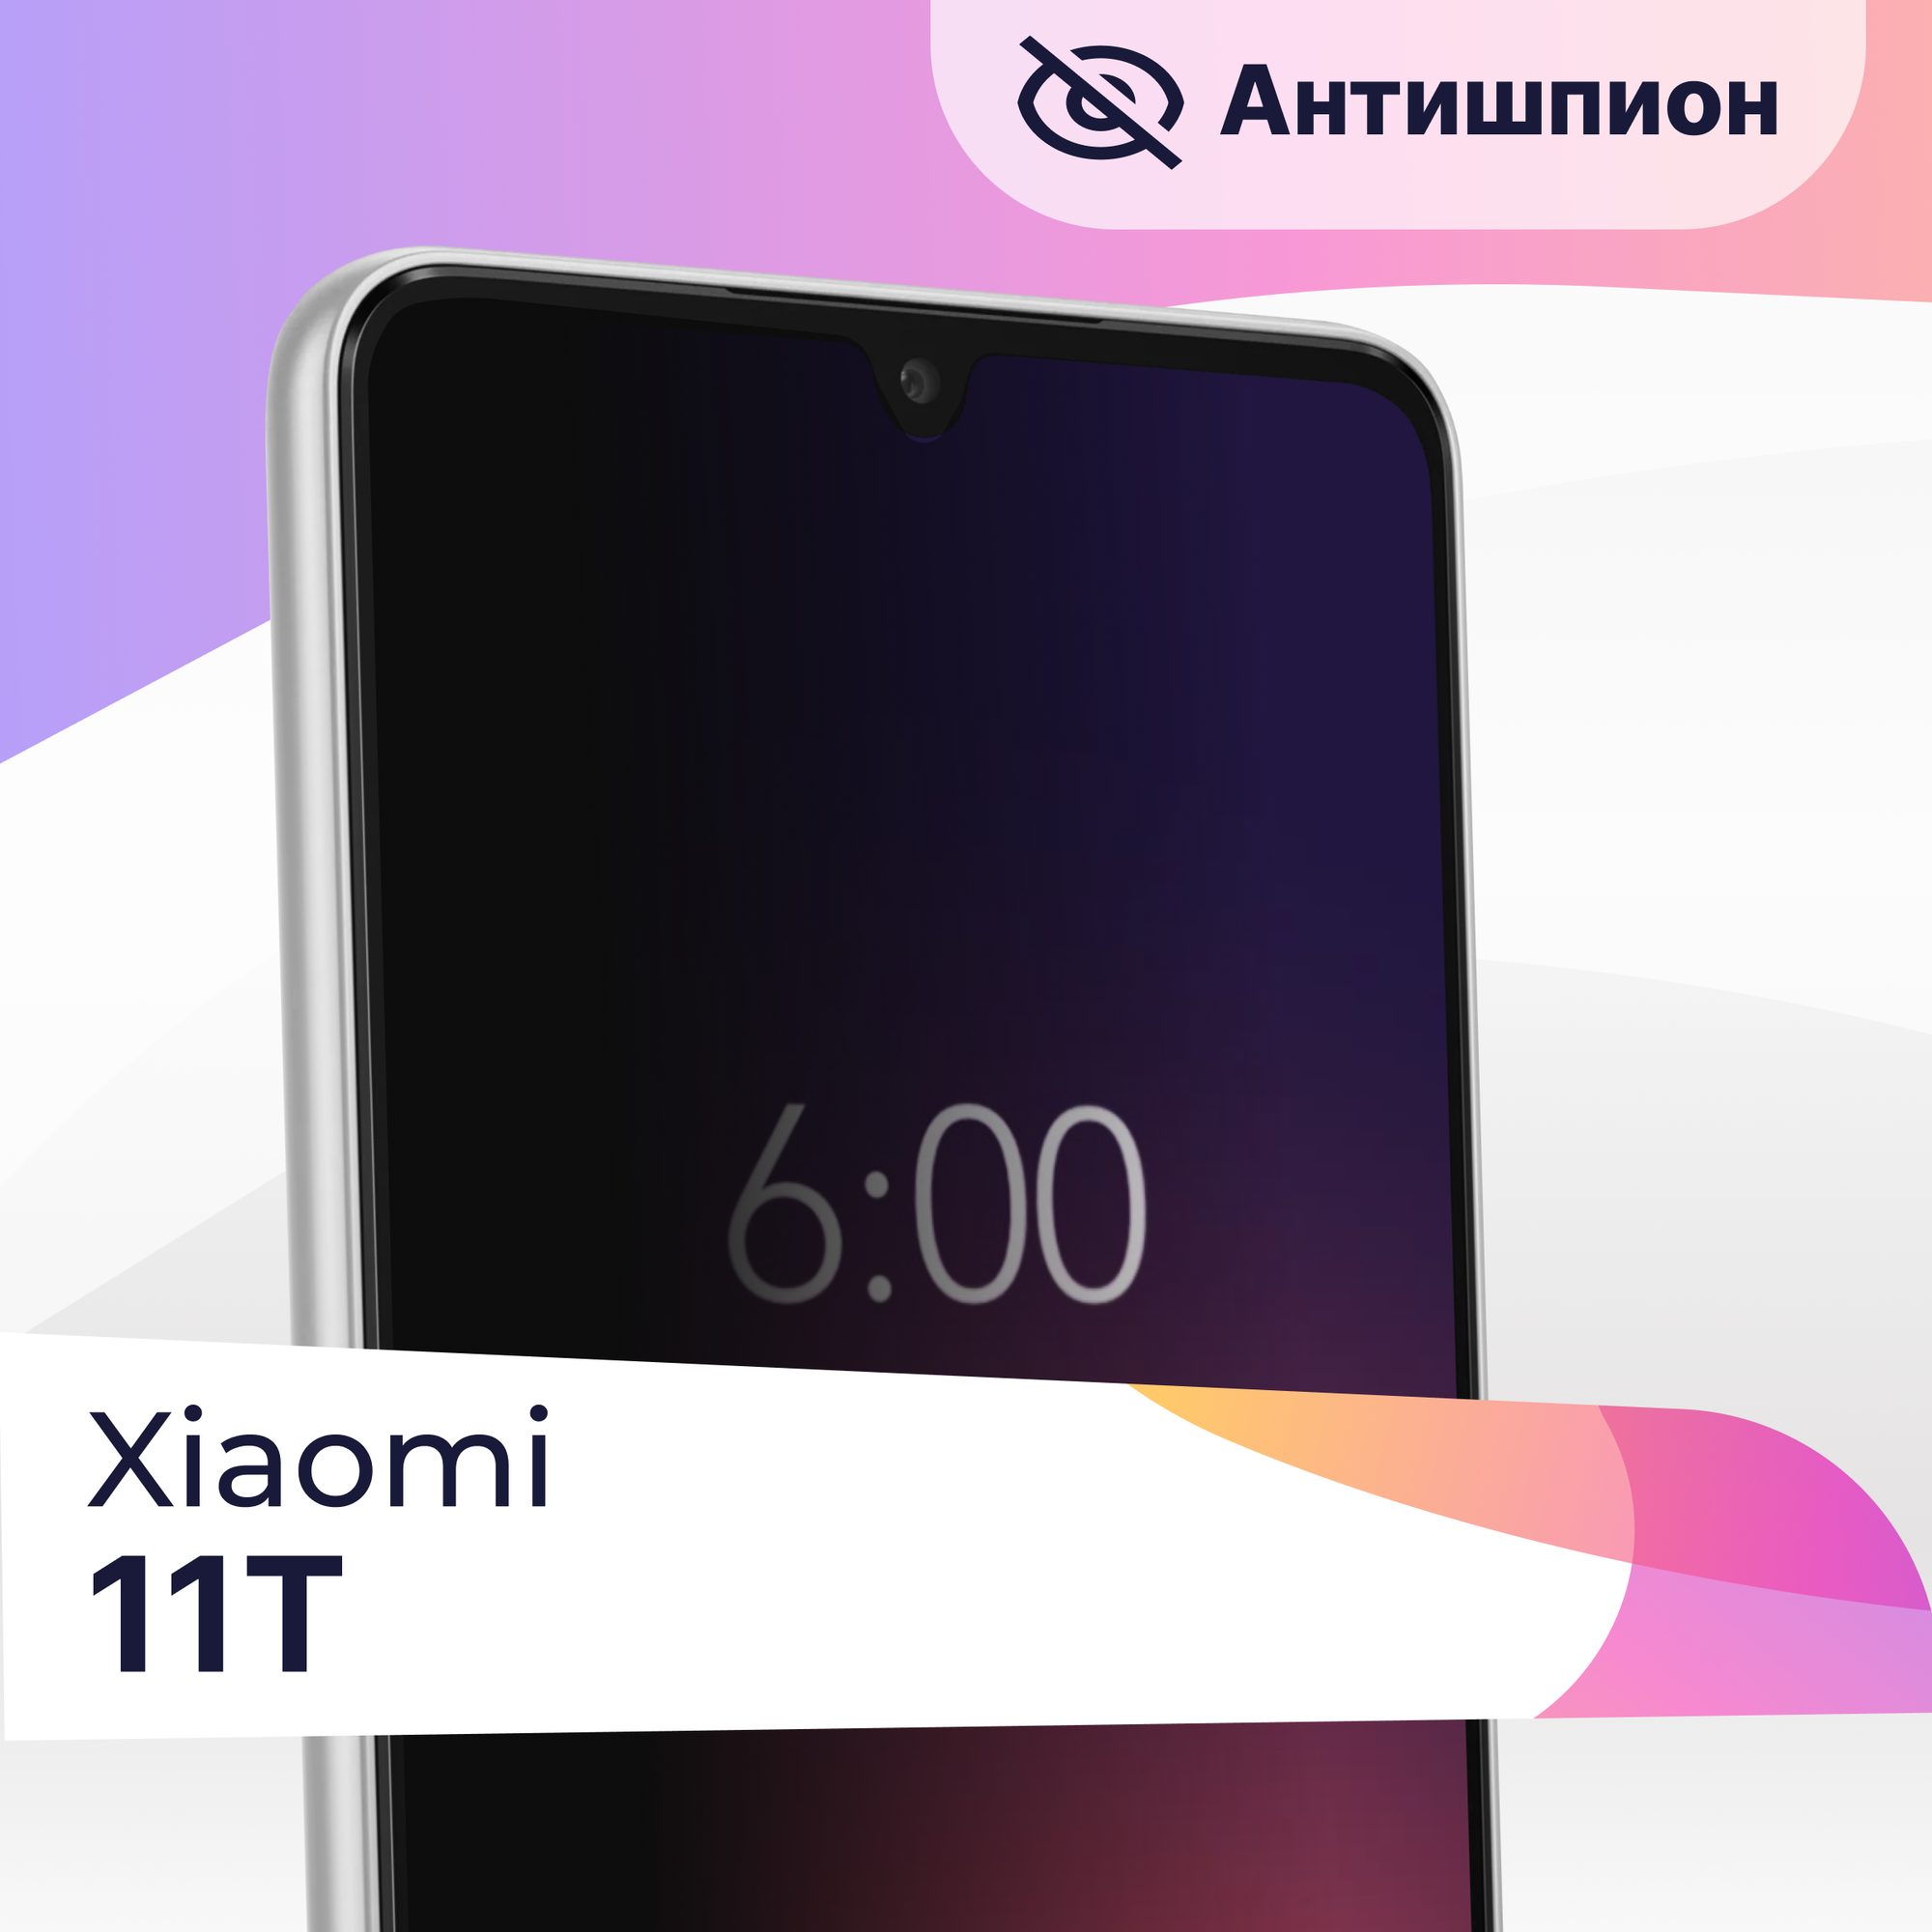 Защитное стекло Антишпион на телефон Xiaomi 11T / Premium 5D стекло для смартфона Сяоми 11Т с черной рамкой / Противоударное стекло